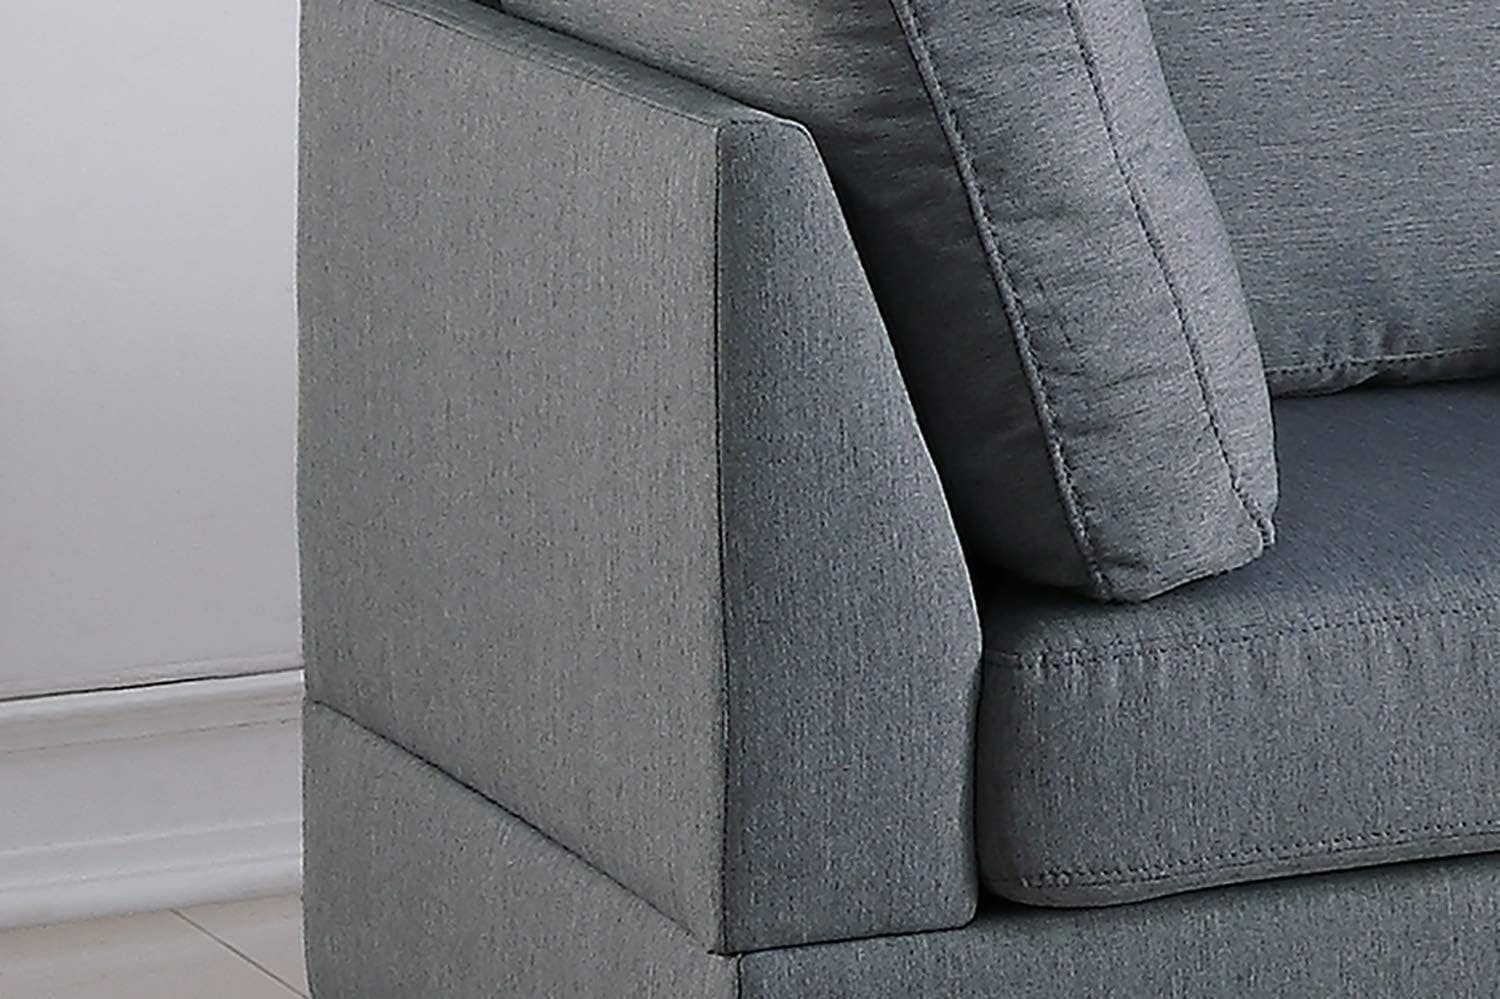 Plush Linen-Like Grey Sectional Sofa Set with Matching Ottoman